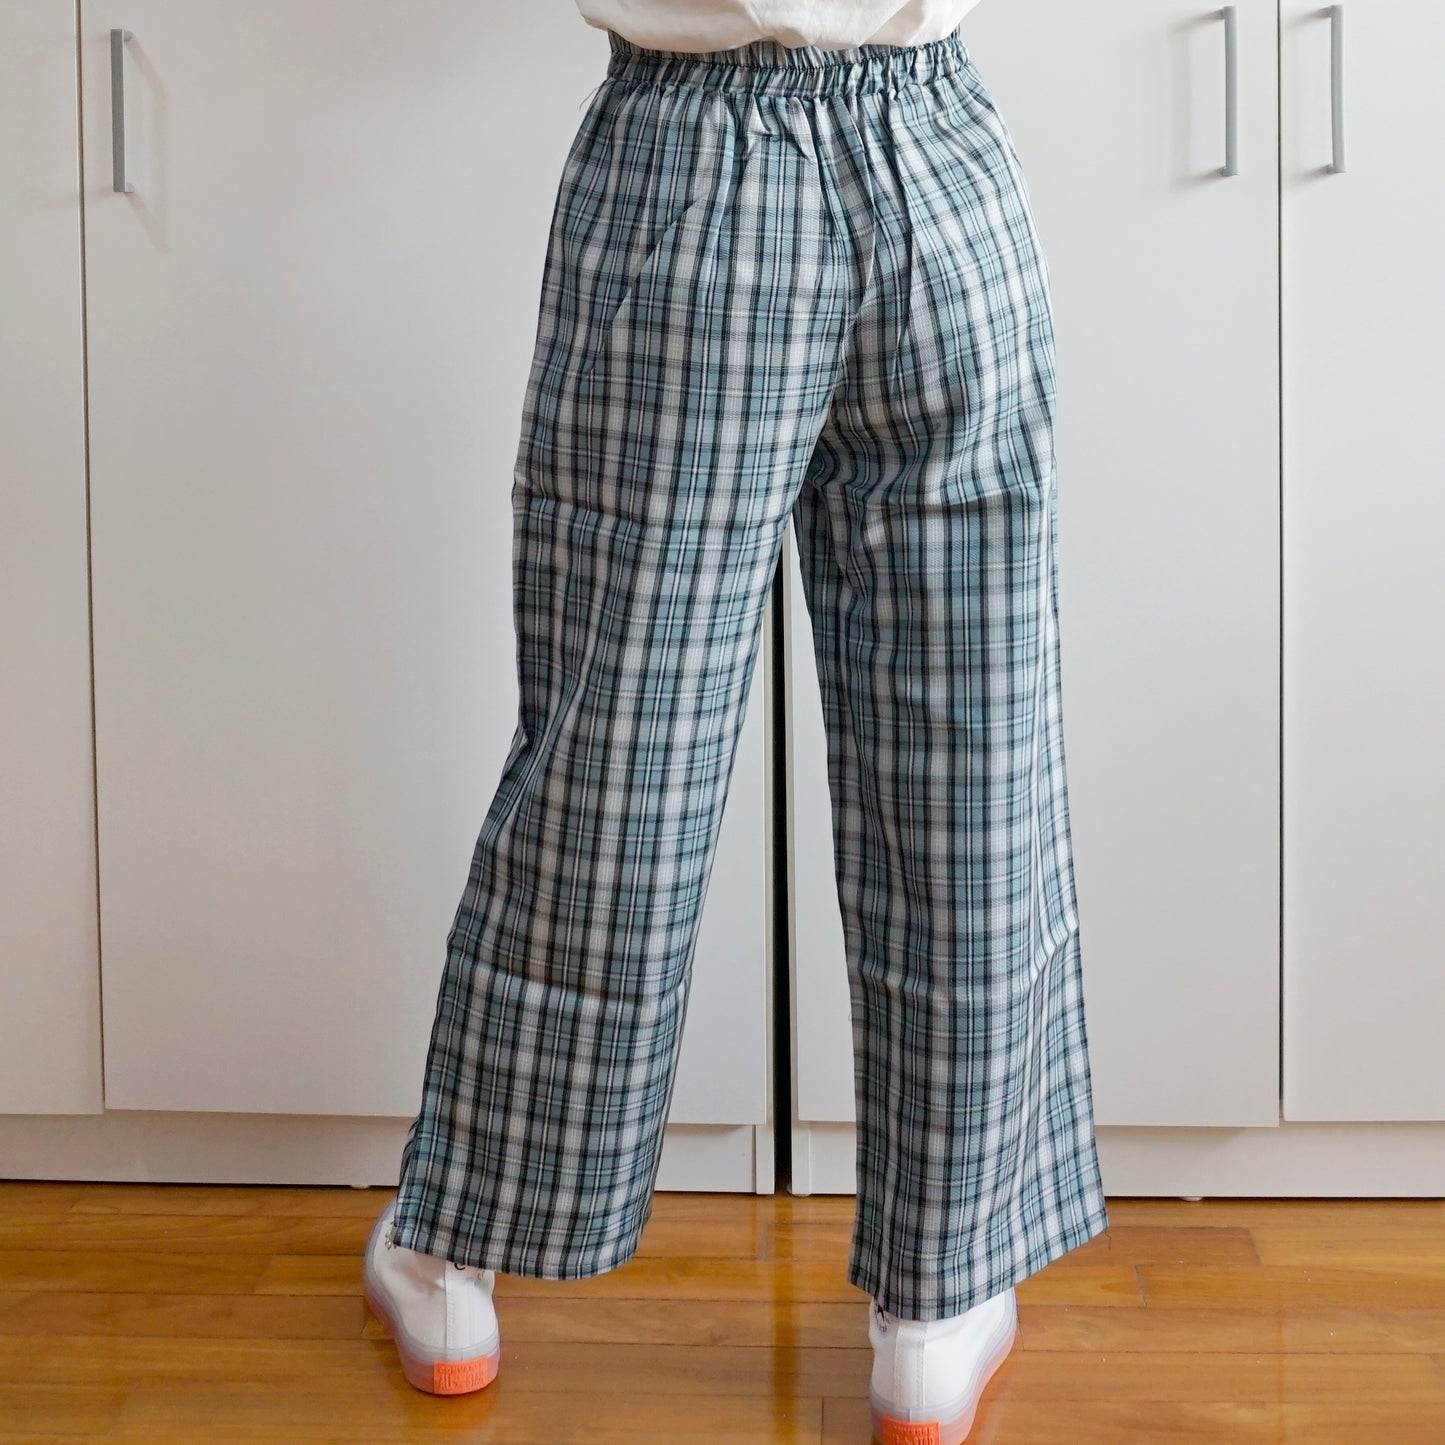 Pull-On Plaid Pants (7 Colors)